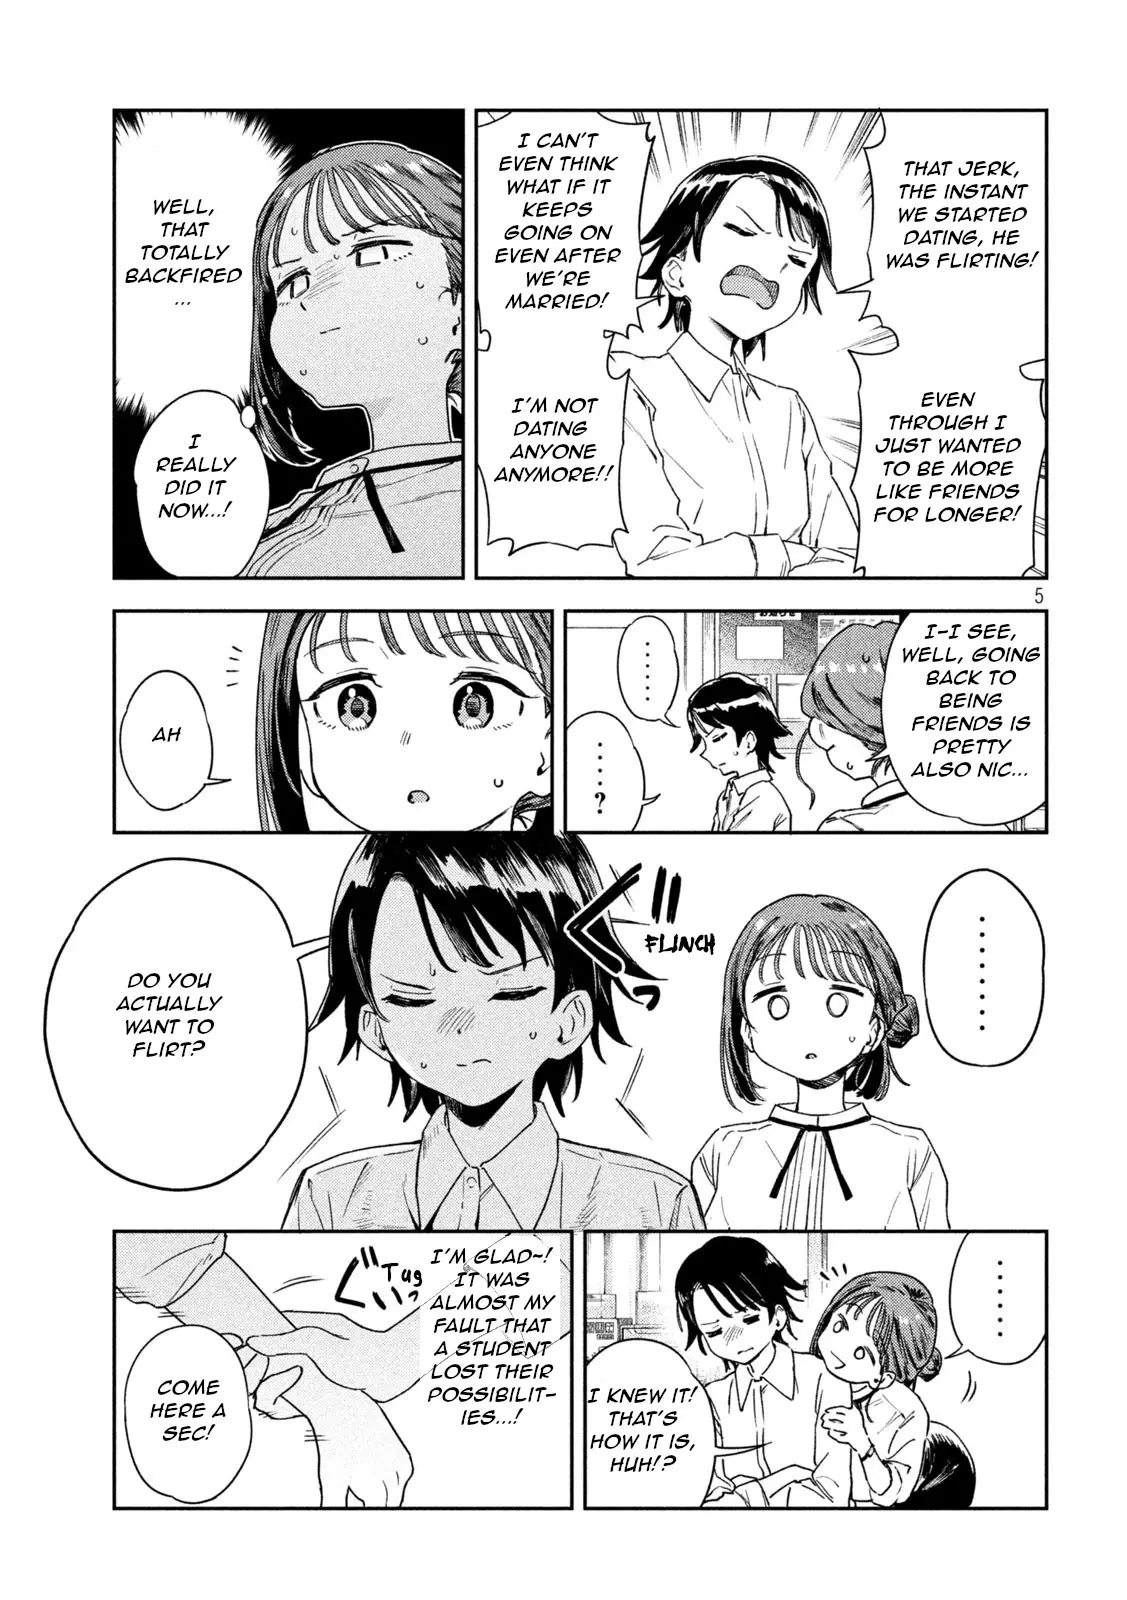 Miyo-Chan Sensei Said So - 6 page 5-0ab3e16e